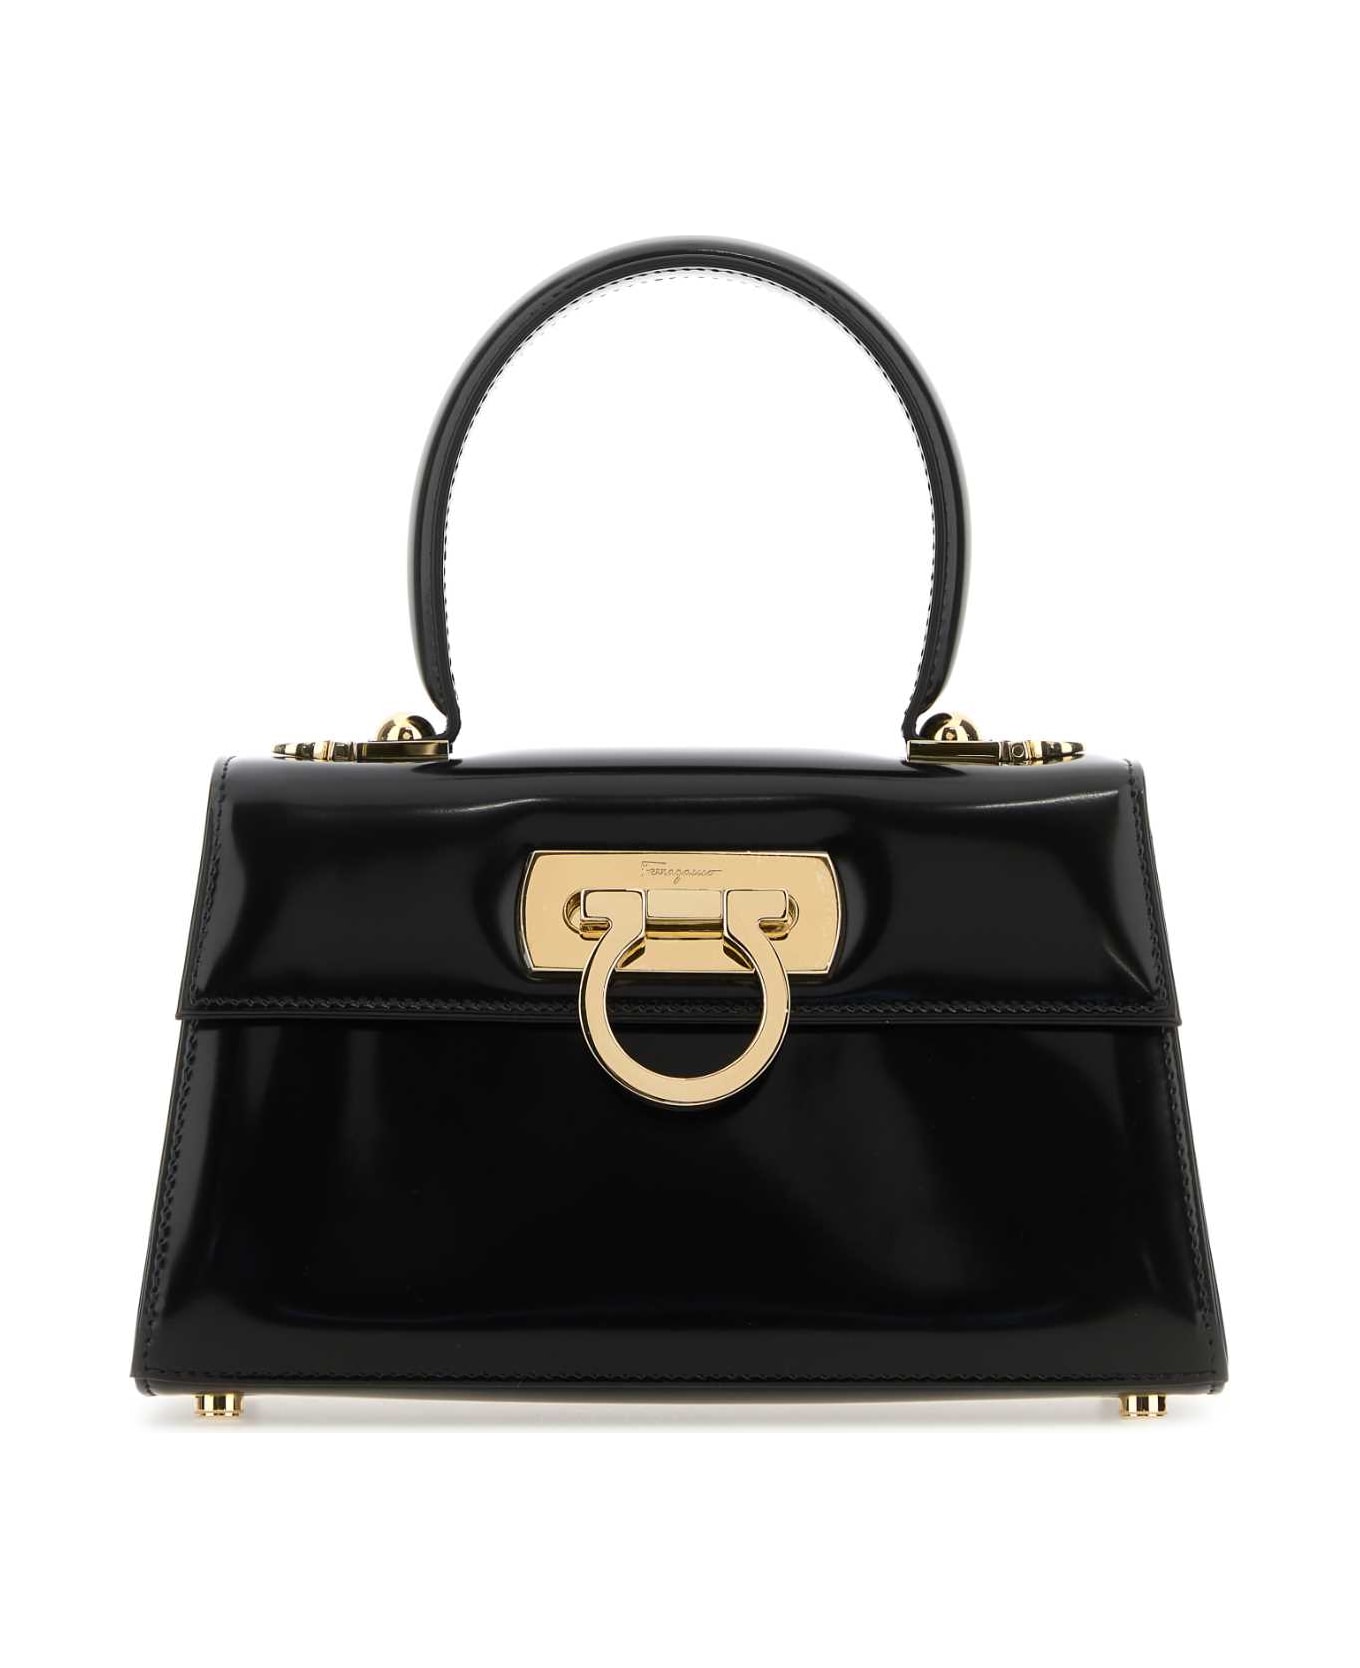 Ferragamo Black Leather Mini Iconic Handbag - NERONERONERO